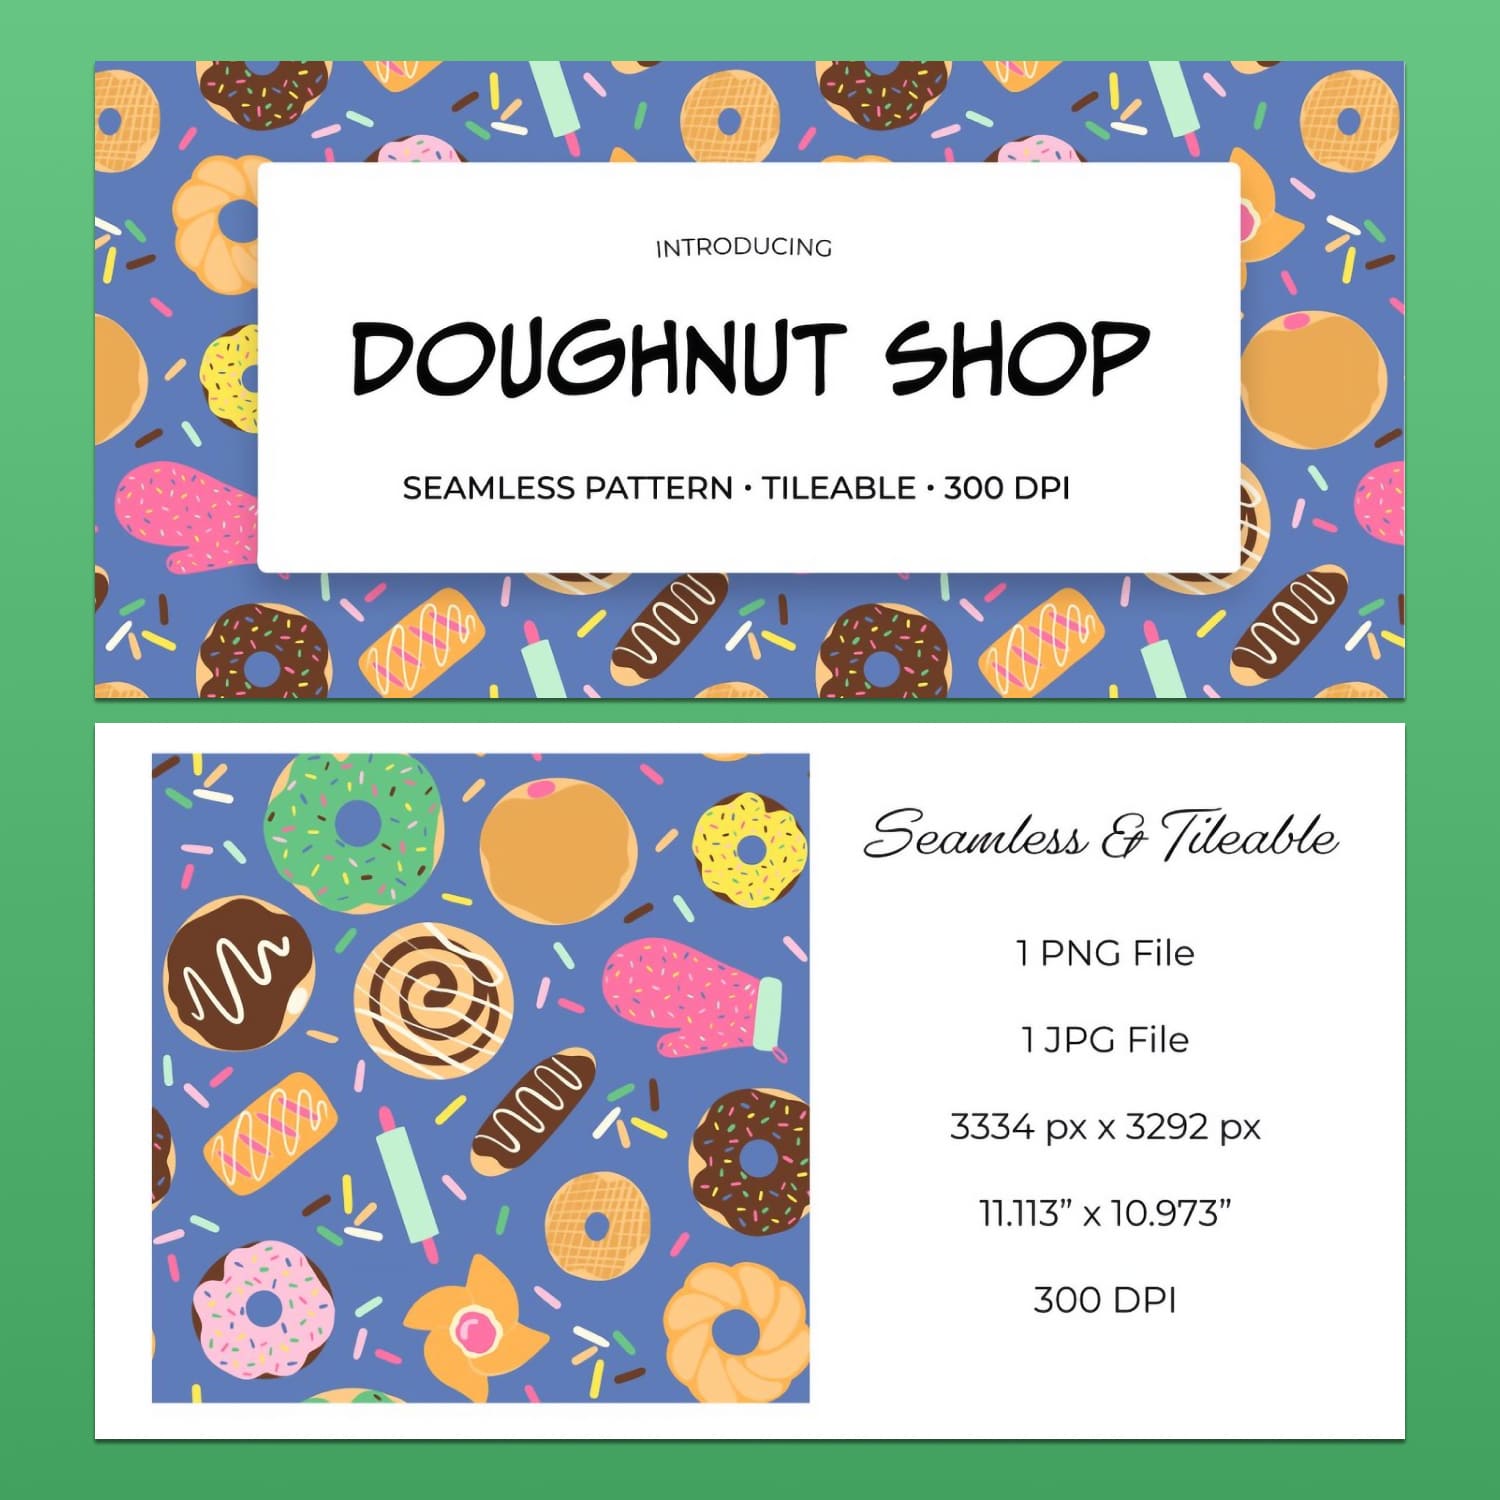 Doughnut shop seamless pattern - main image preview.